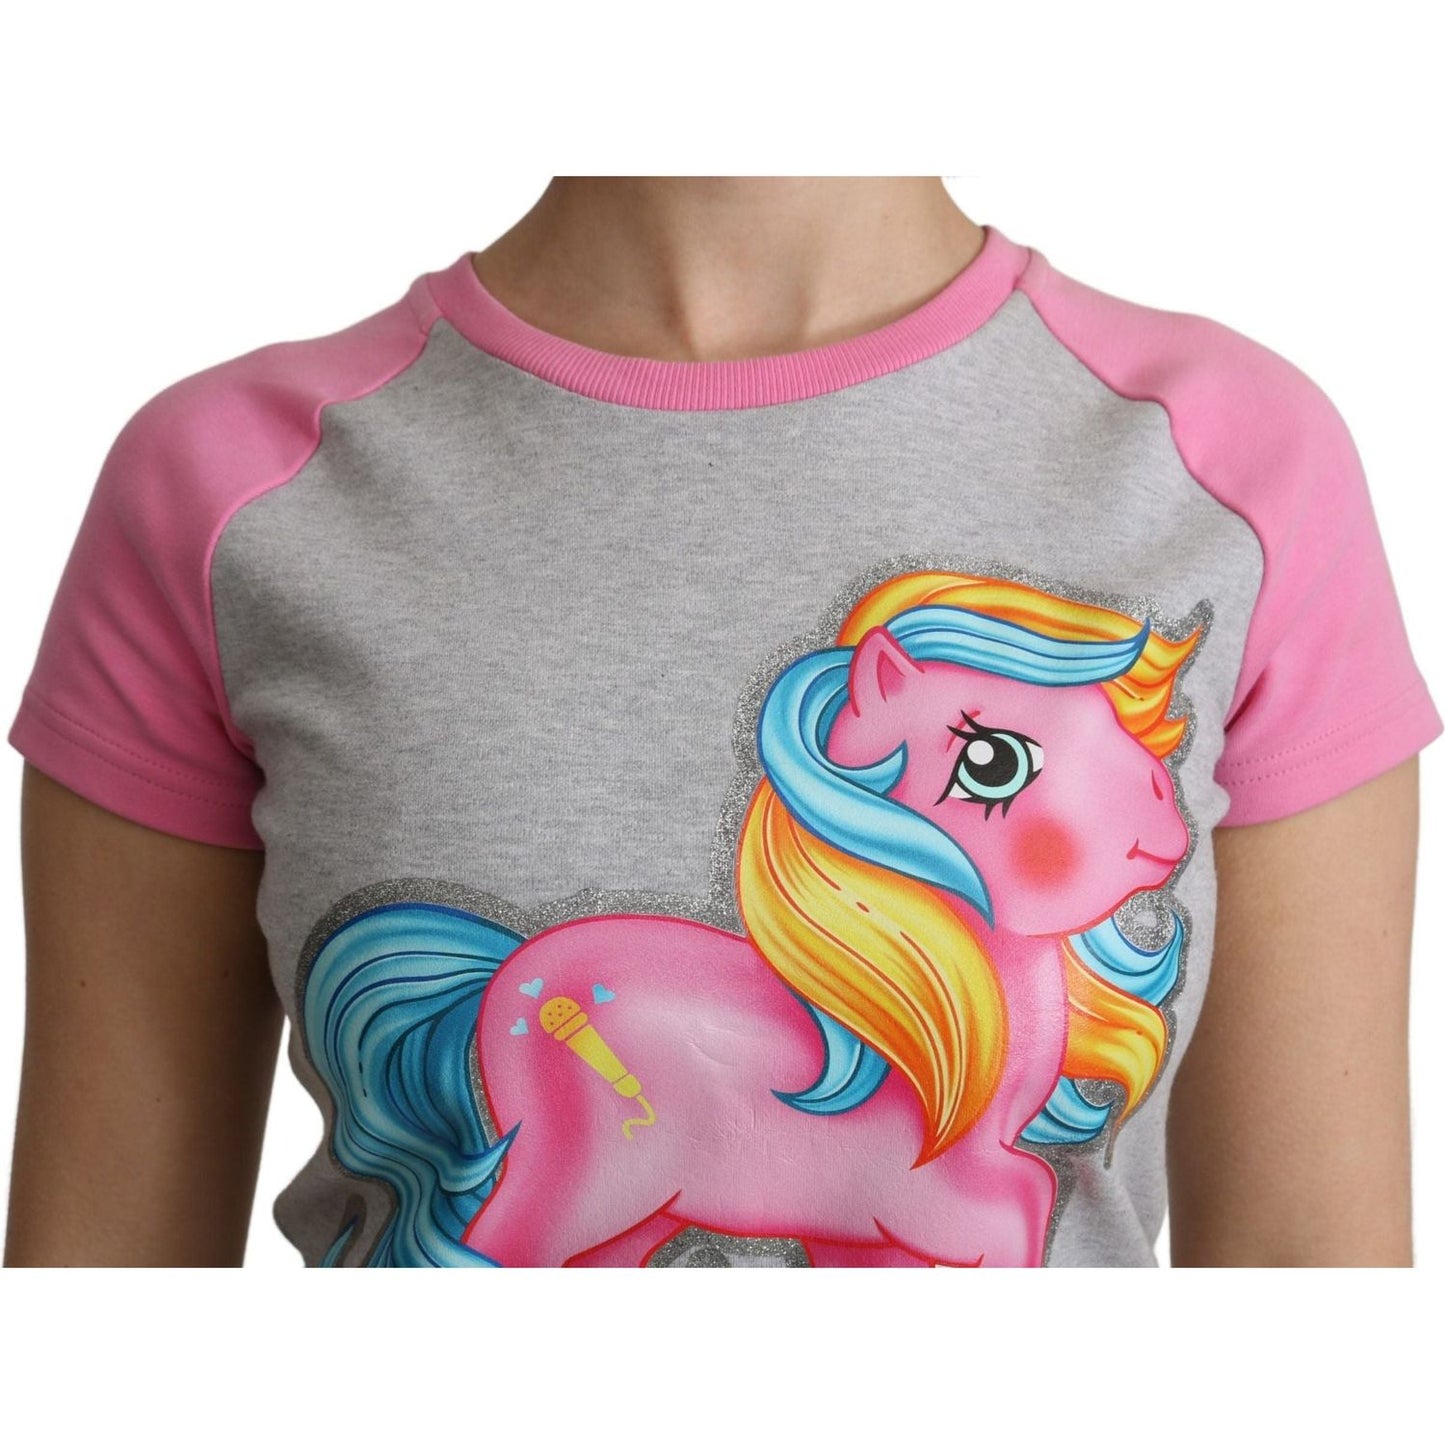 Moschino Chic Gray Crew Neck Cotton T-shirt with Pink Accents gray-and-pink-cotton-t-shirt-my-little-pony-top IMG_1484-scaled-9839bee5-ed4.jpg